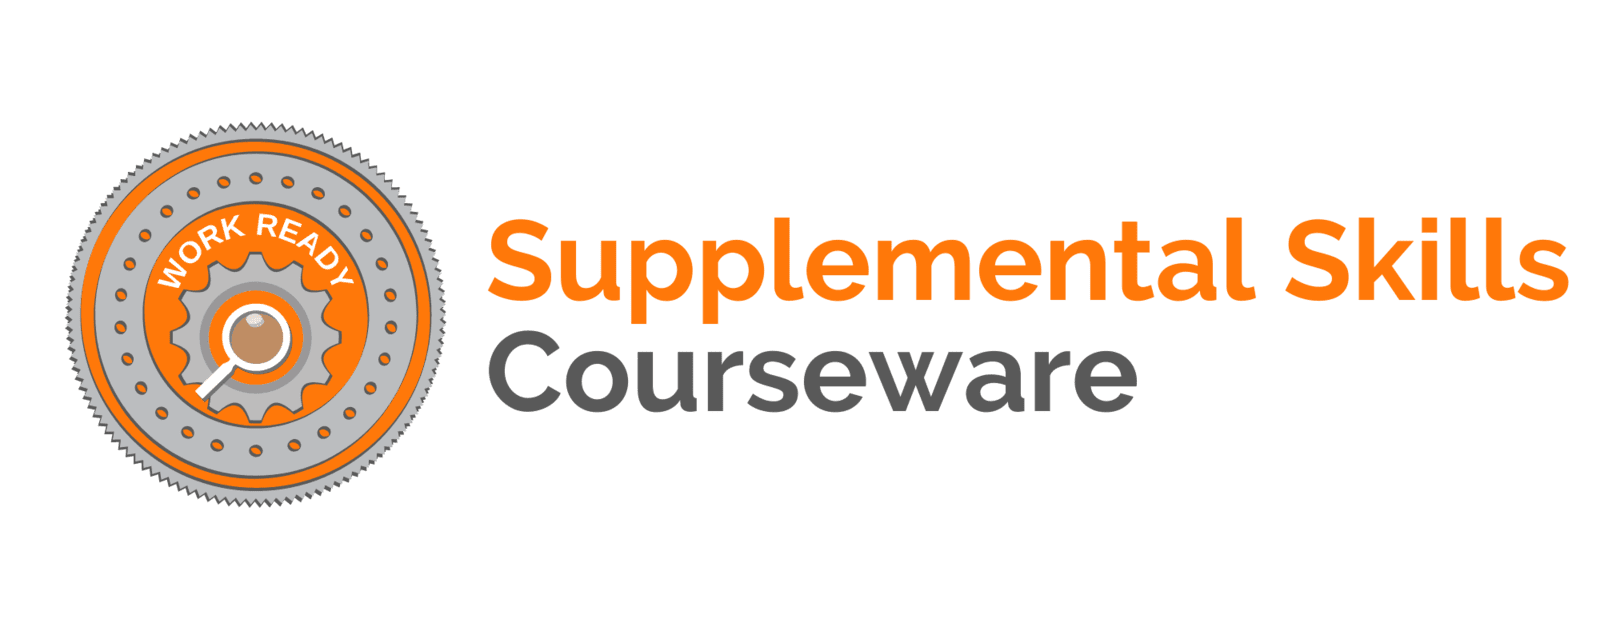 Supplemental Skills Courseware